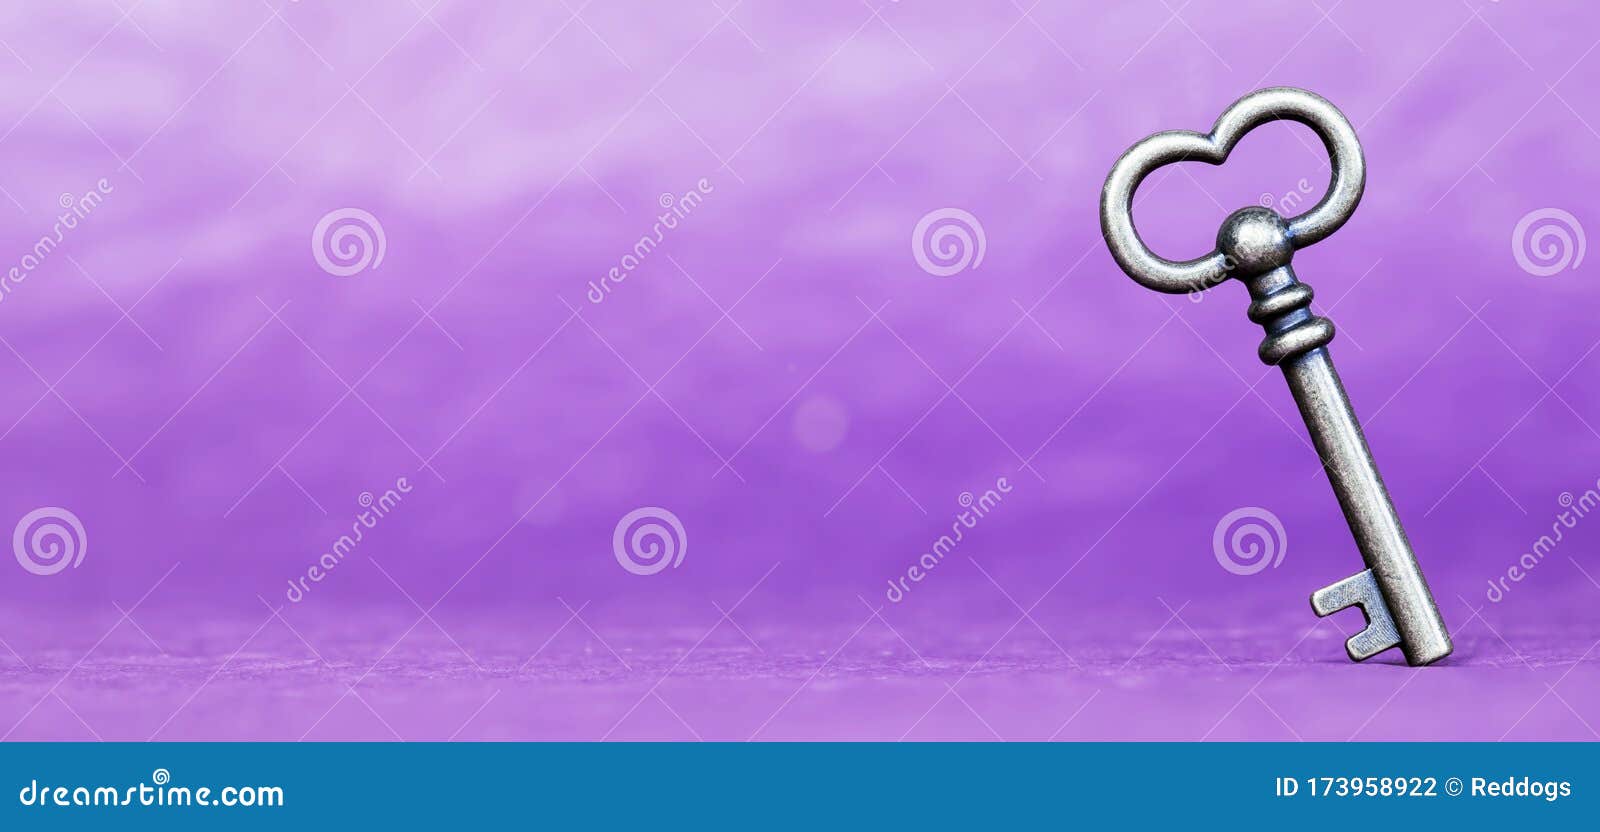 escape room concept. vintage key on purple background, web banner